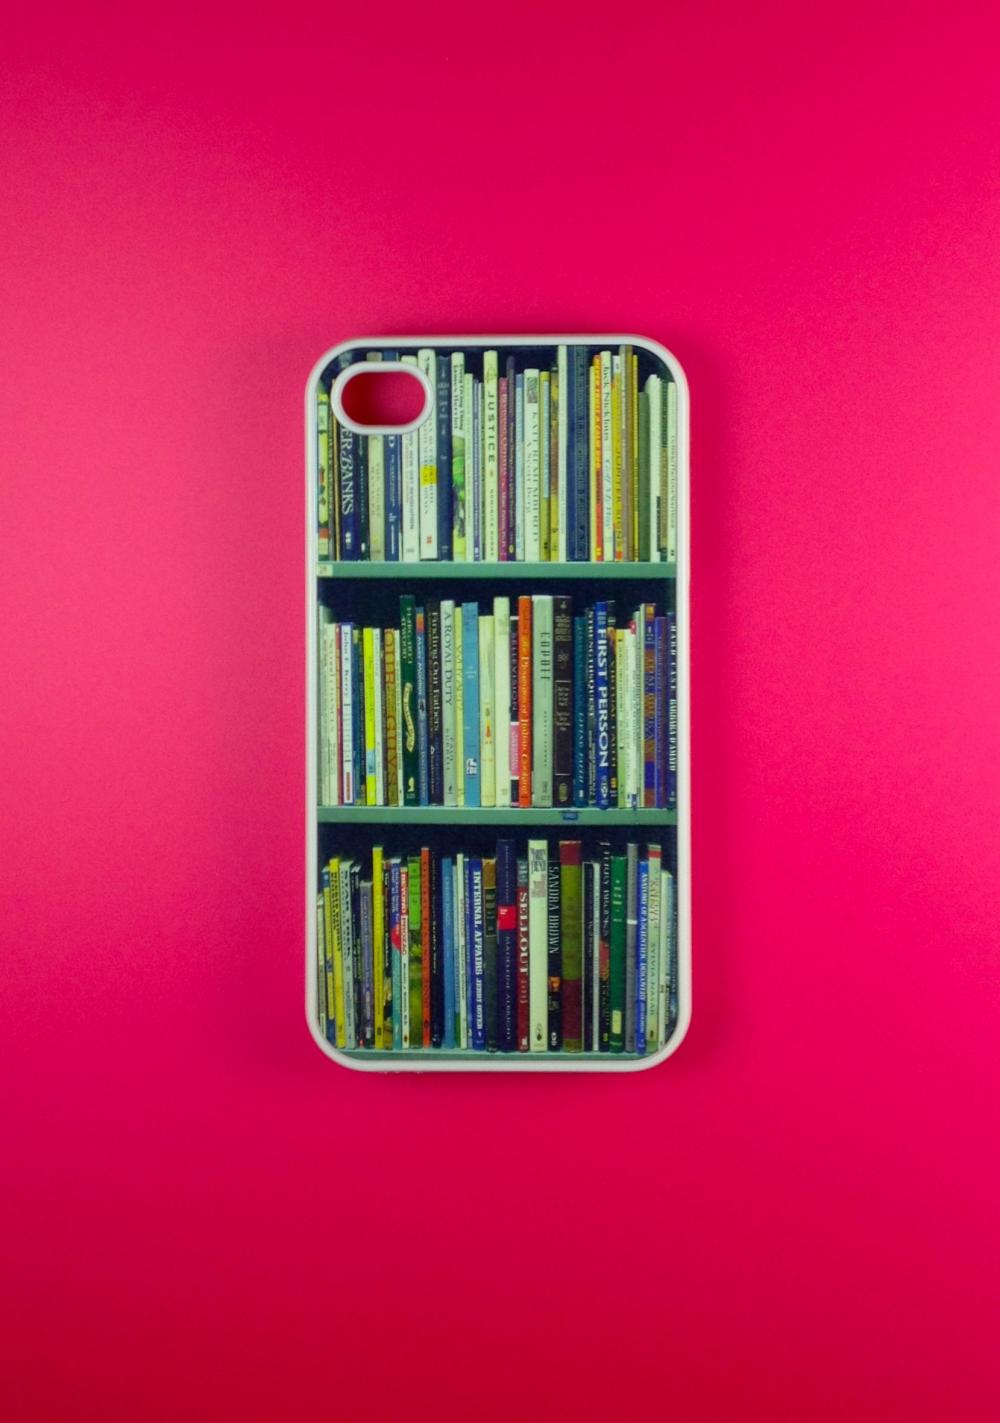 Bookshelf Iphone 4 Case - Bookshelf Iphone 4s Case, Iphone Case, Iphone 4 Cover